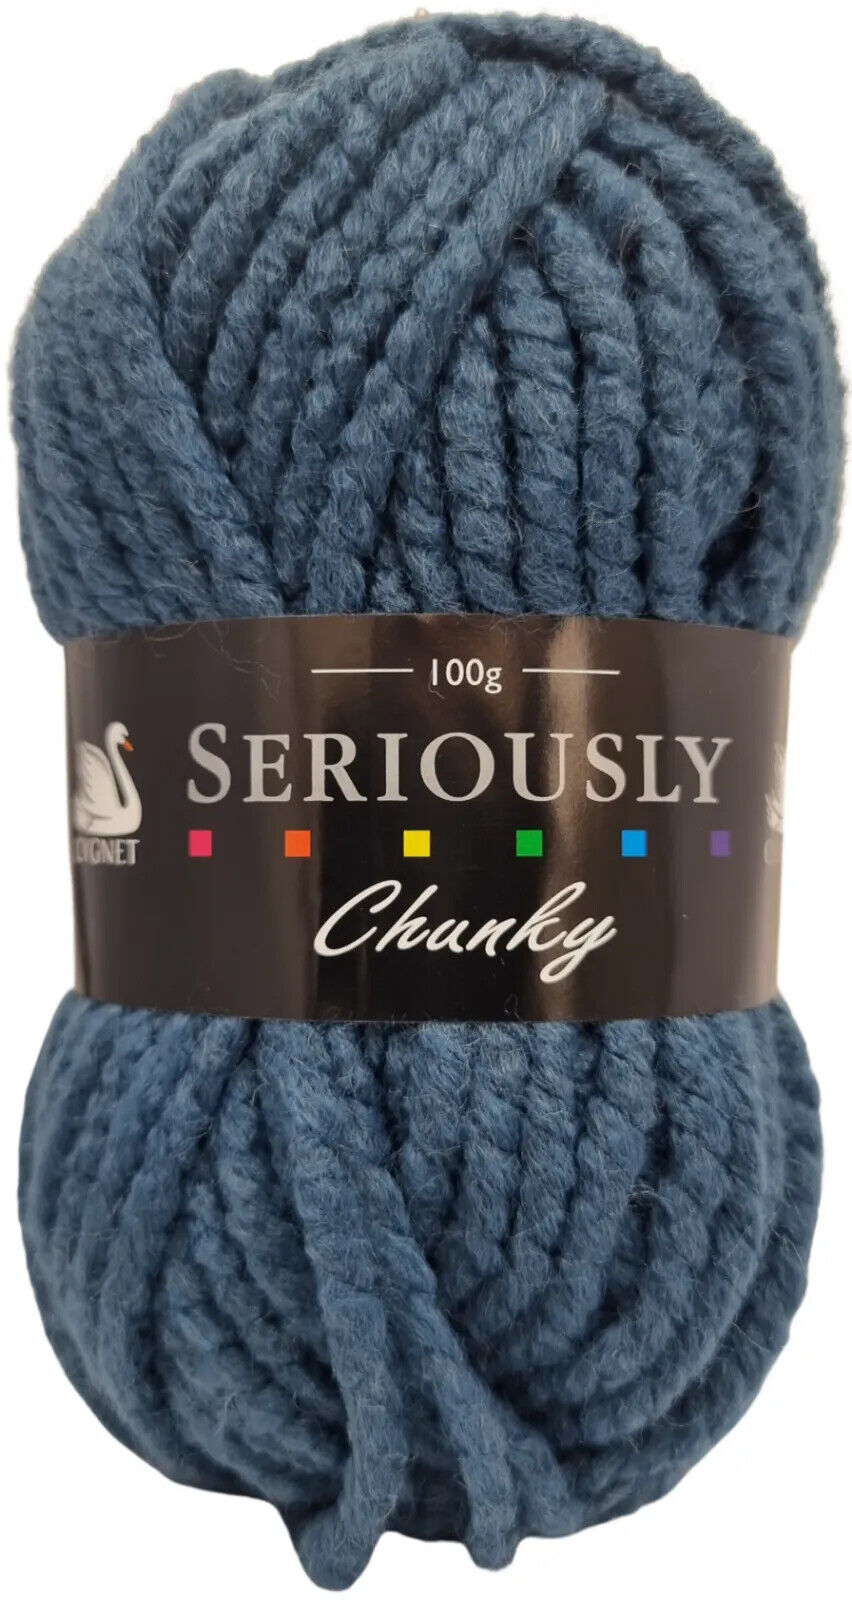 Cygnet SERIOUSLY CHUNKY Plains - Just Denim 2796 Knitting Yarn